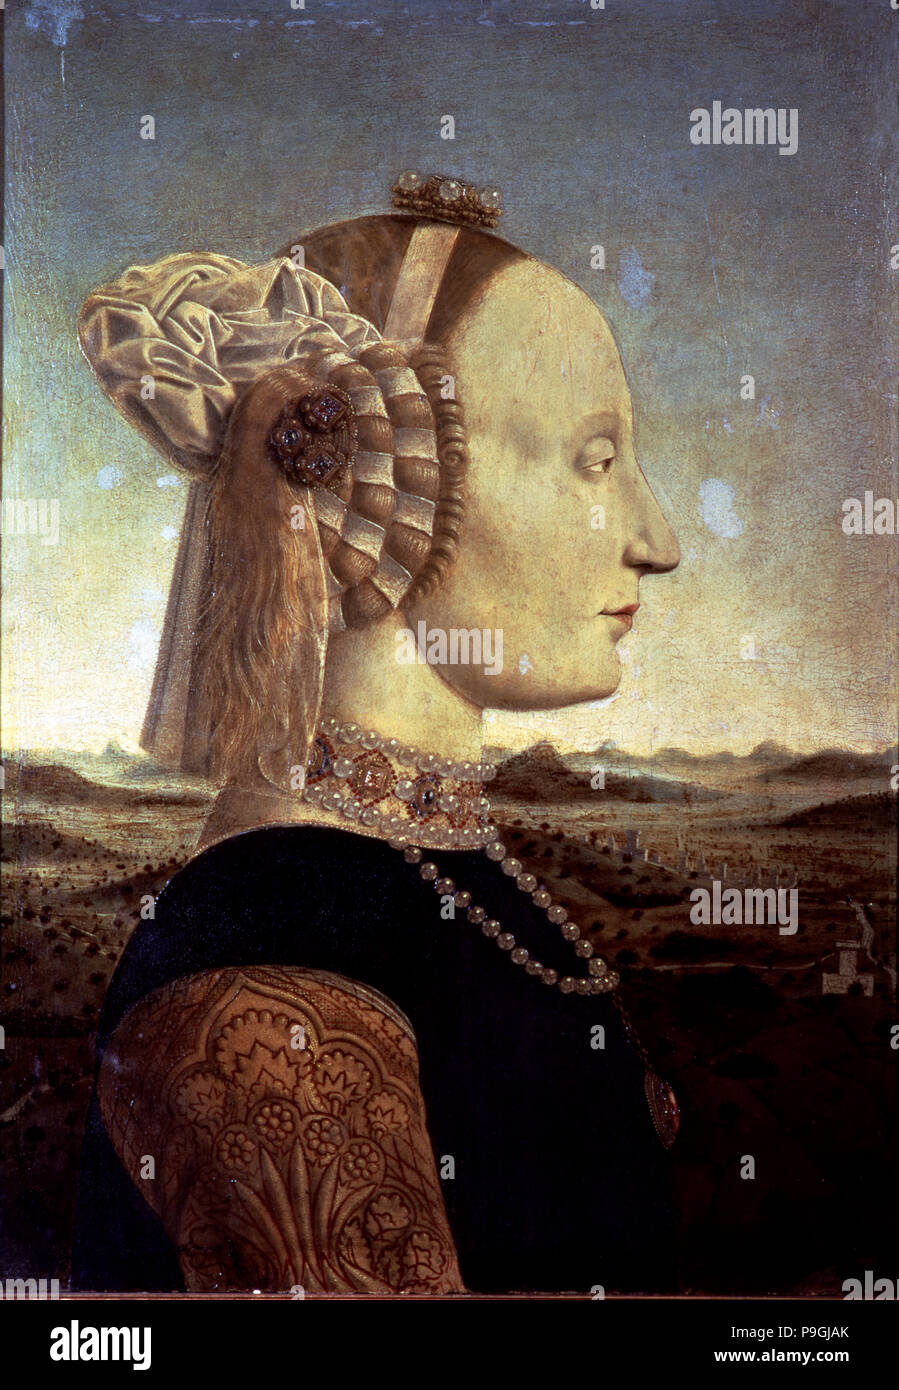 Battista Sforza', portrait de Piero della Francesca. Banque D'Images